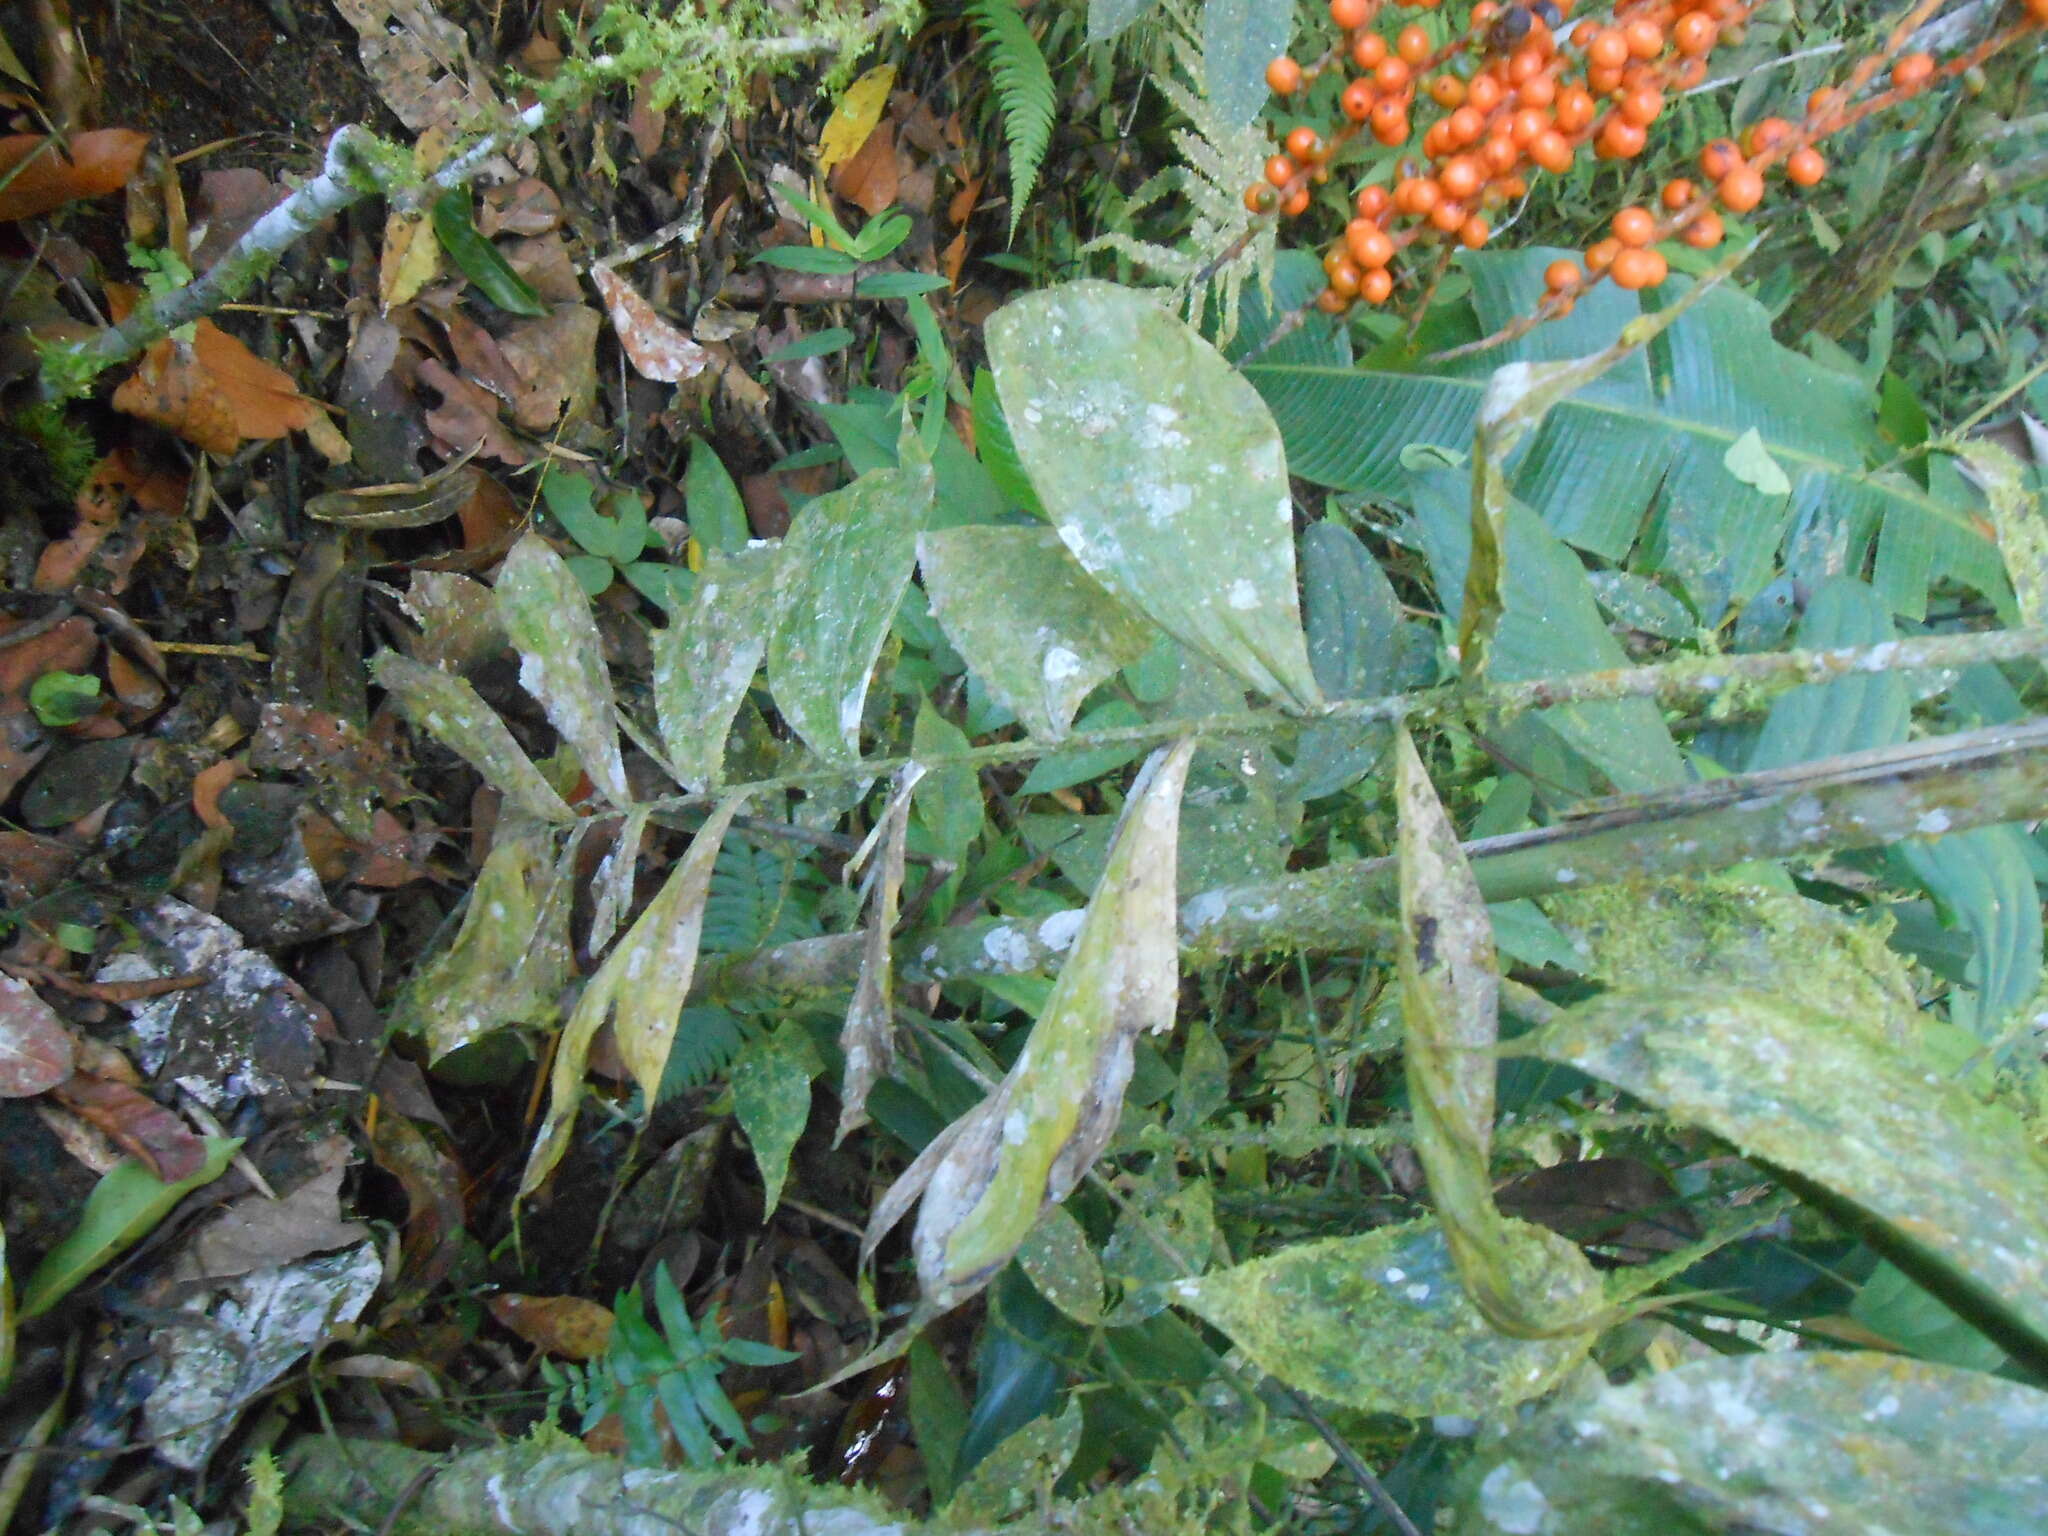 Image of Chamaedorea pinnatifrons (Jacq.) Oerst.